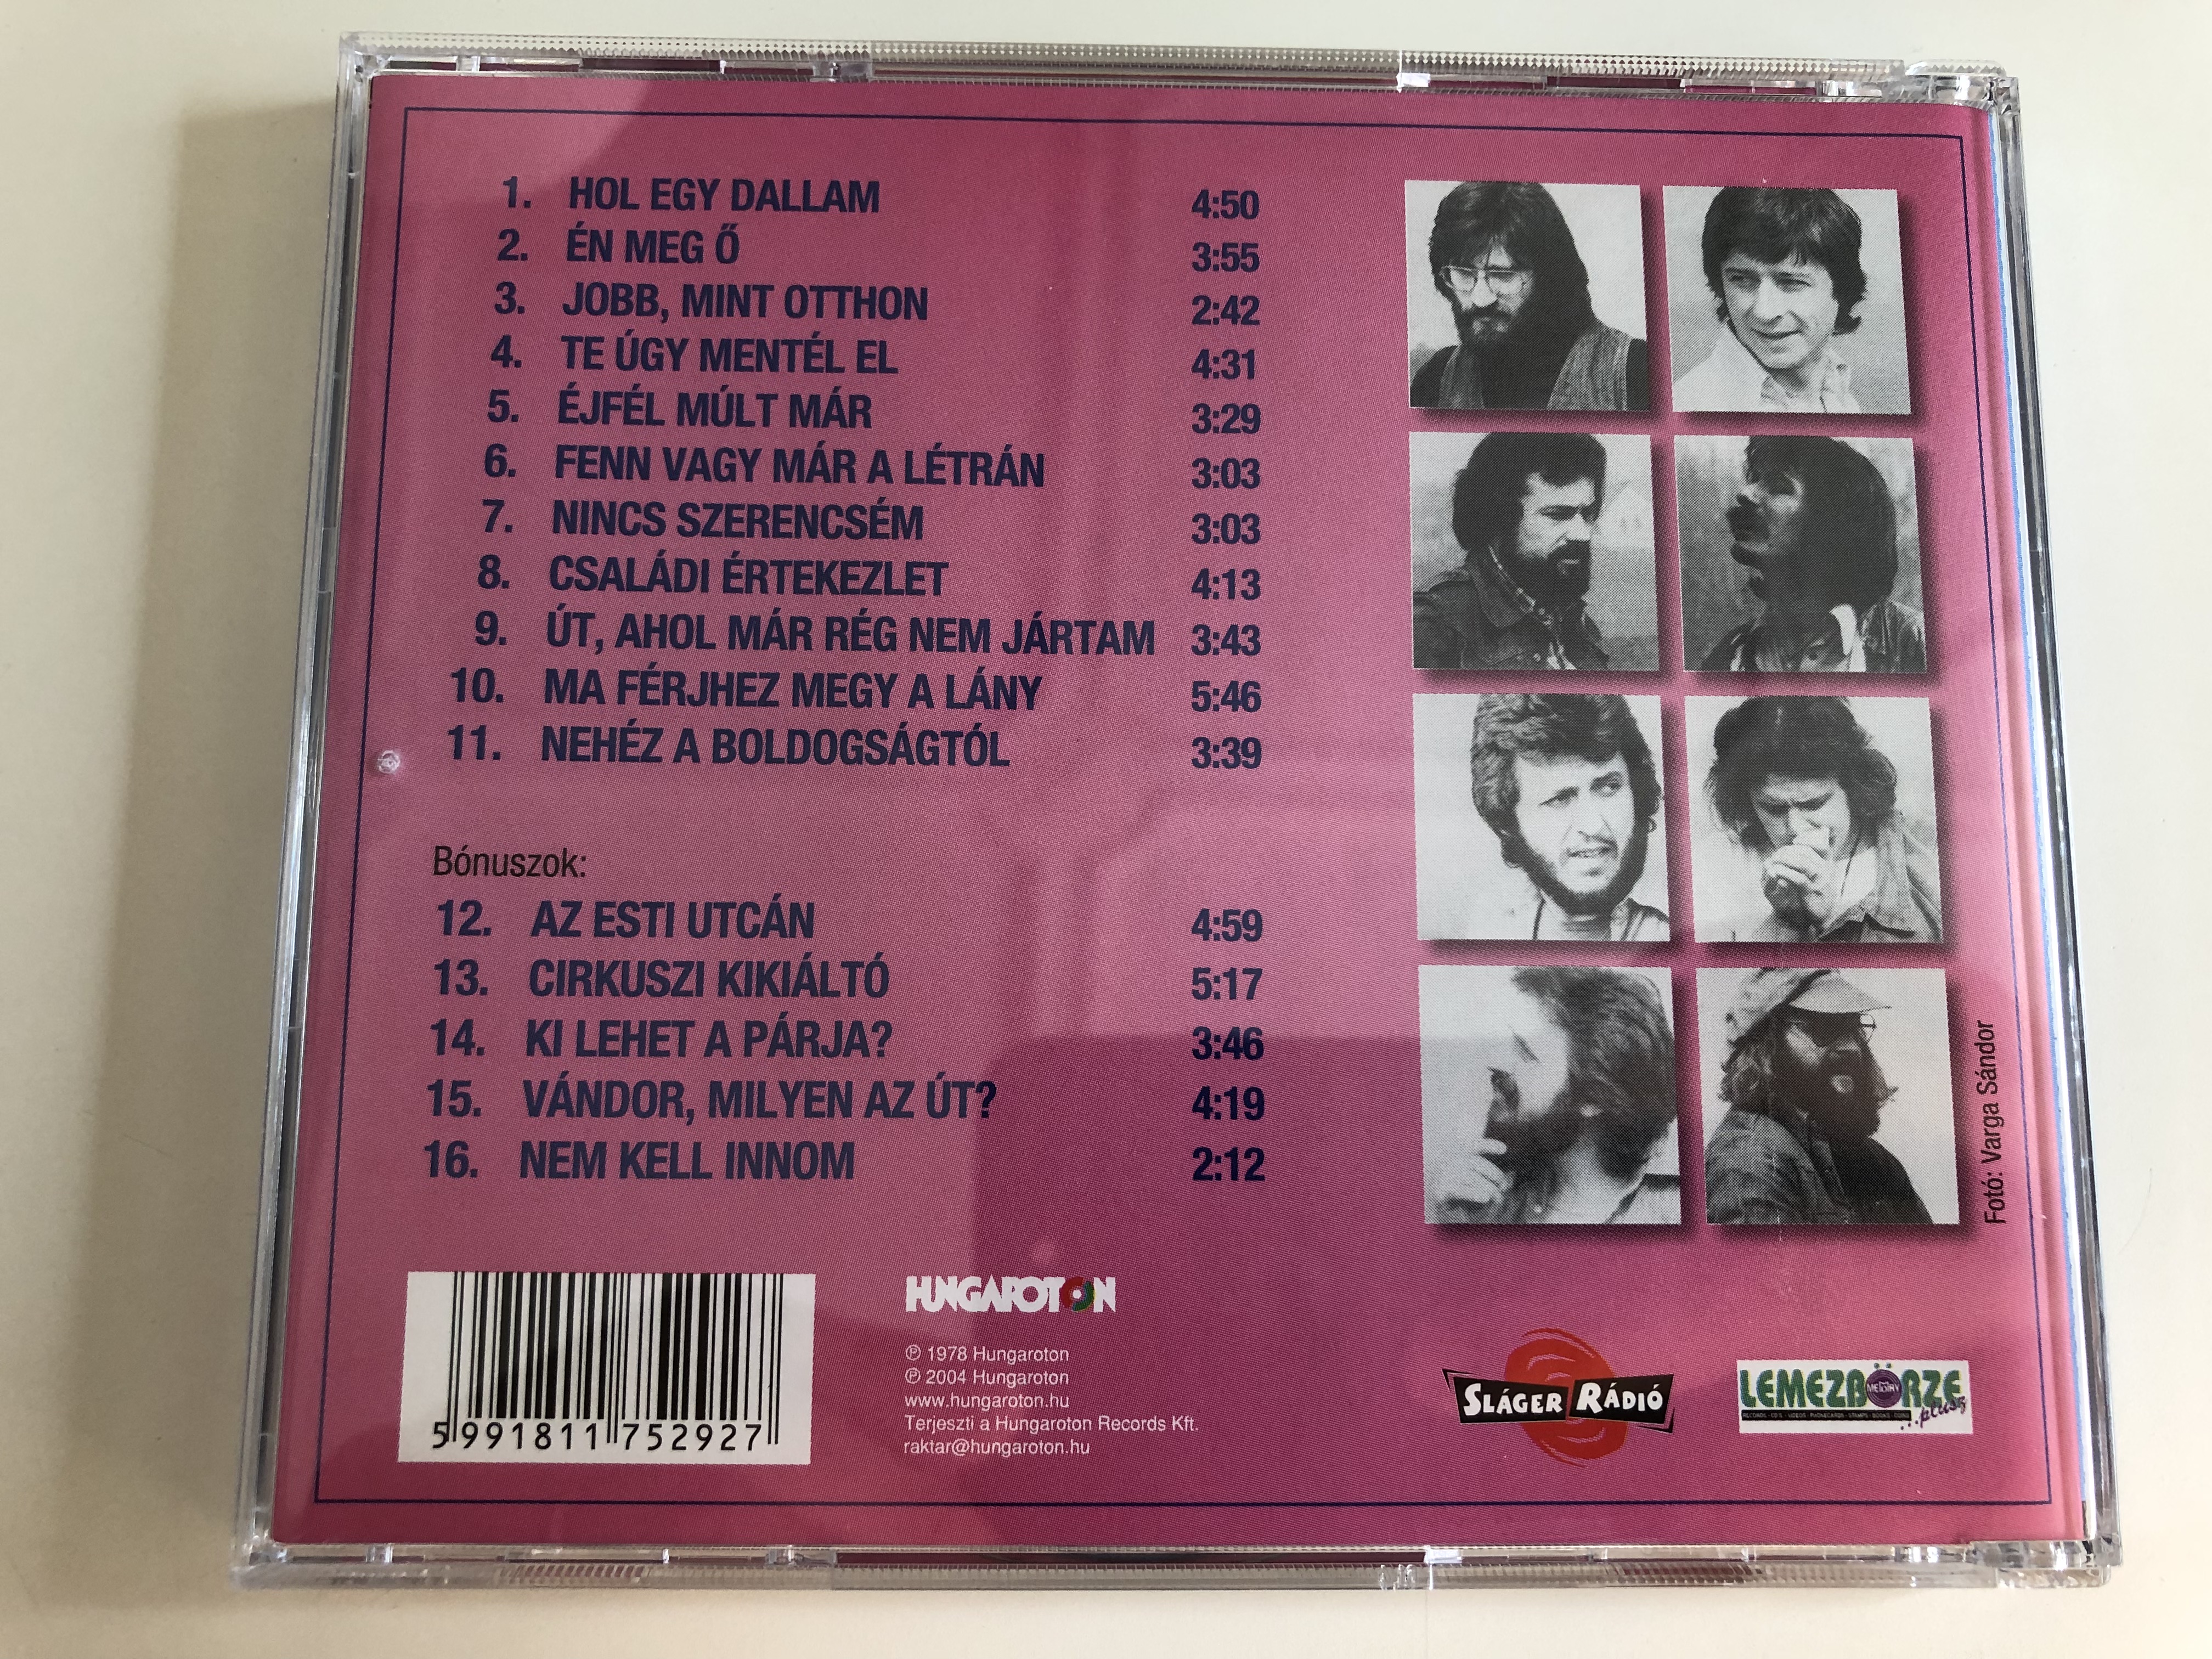 apostol-a-l-tr-n-a-magyar-popsztori-hungarian-pop-band-audio-cd-2004-hungaroton-hcd-17529-8-.jpg